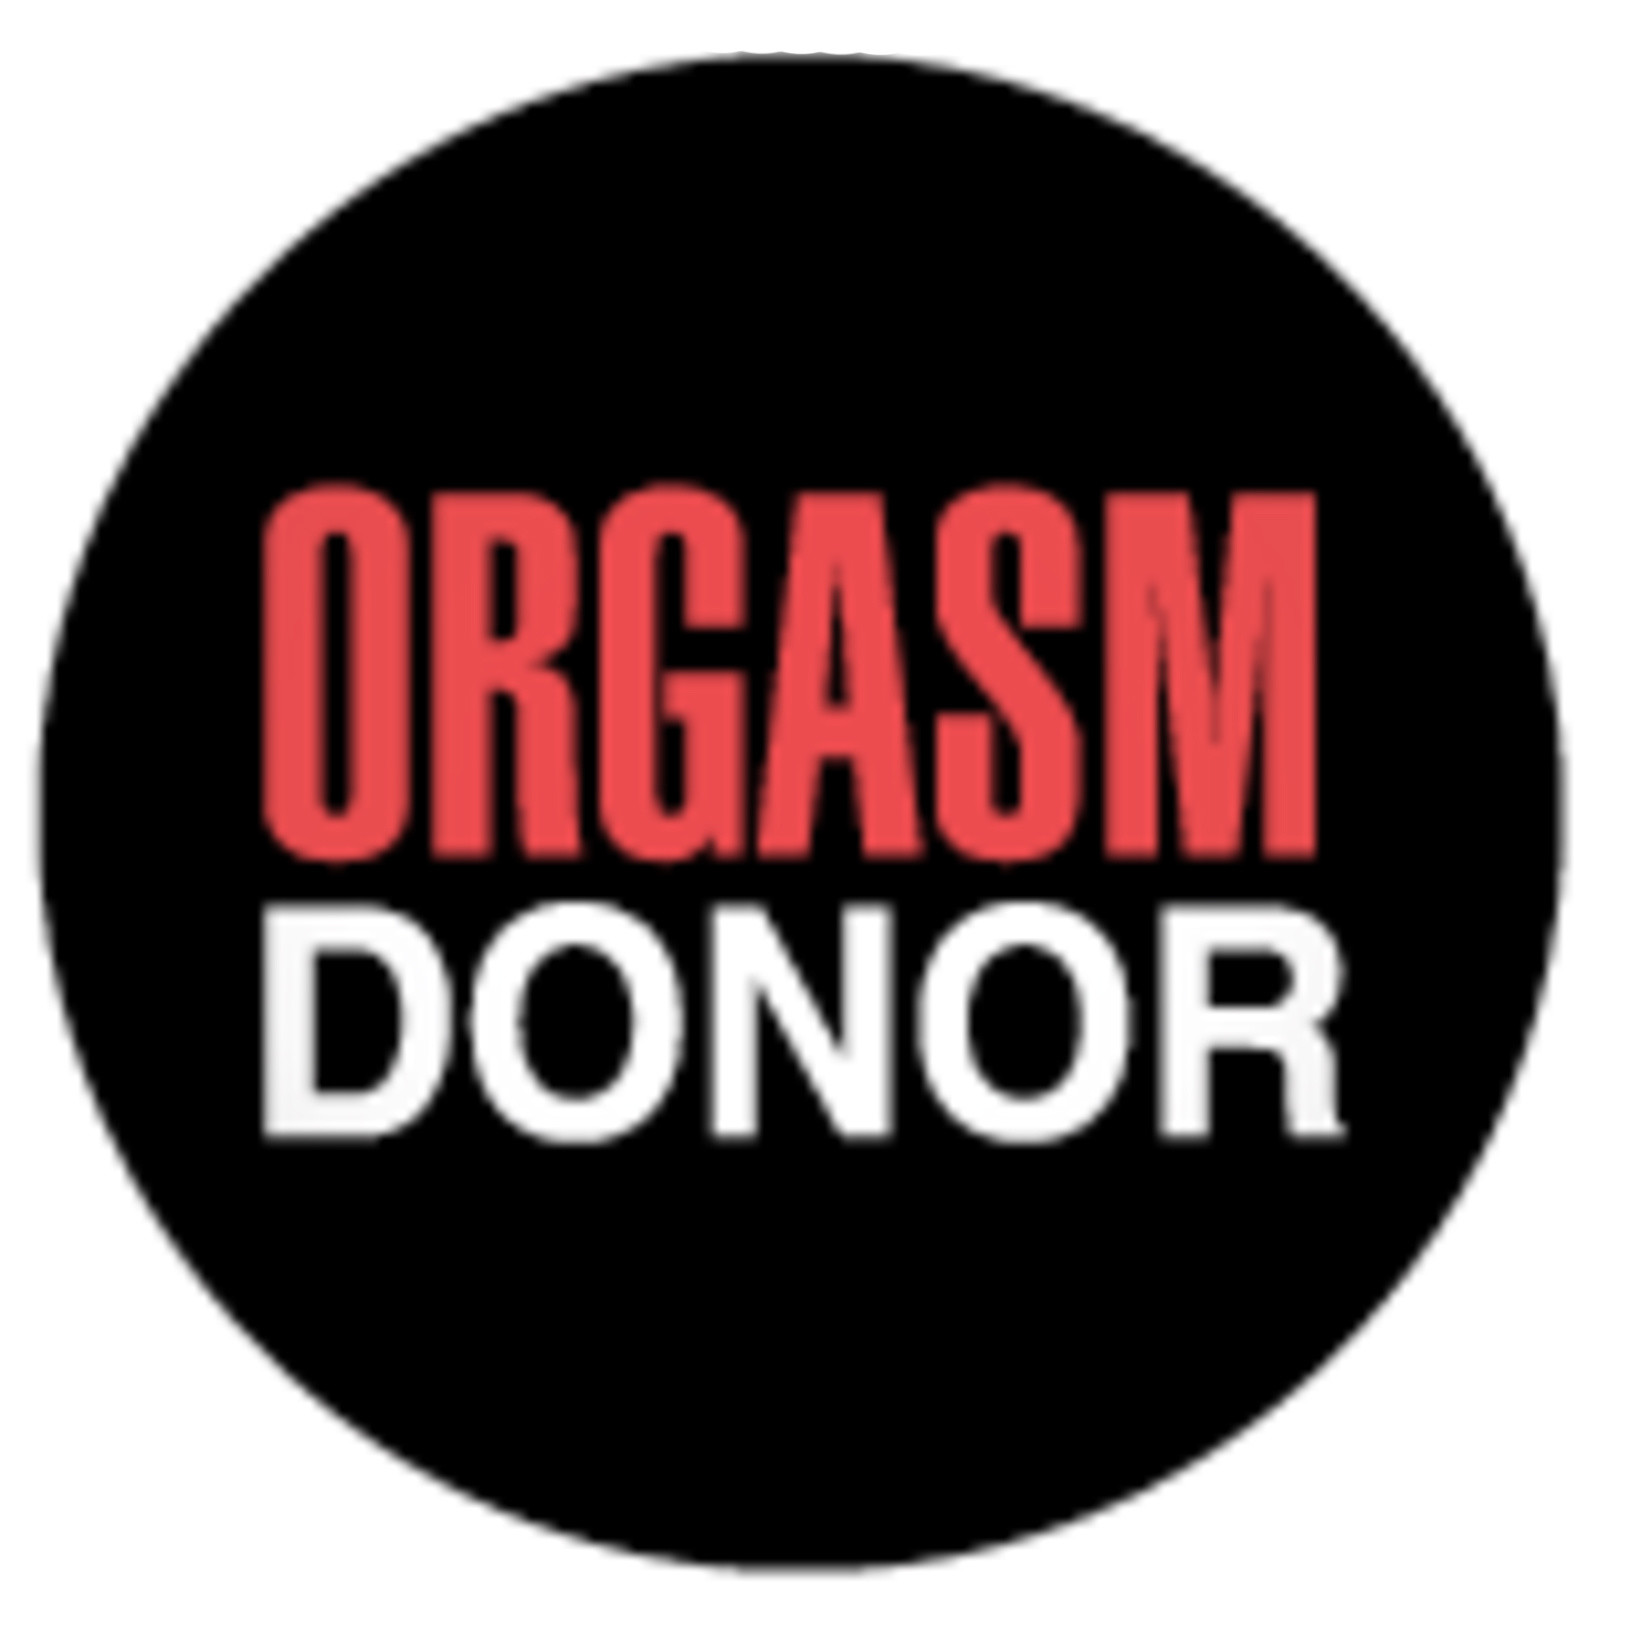 Magnet - Orgasm Donor